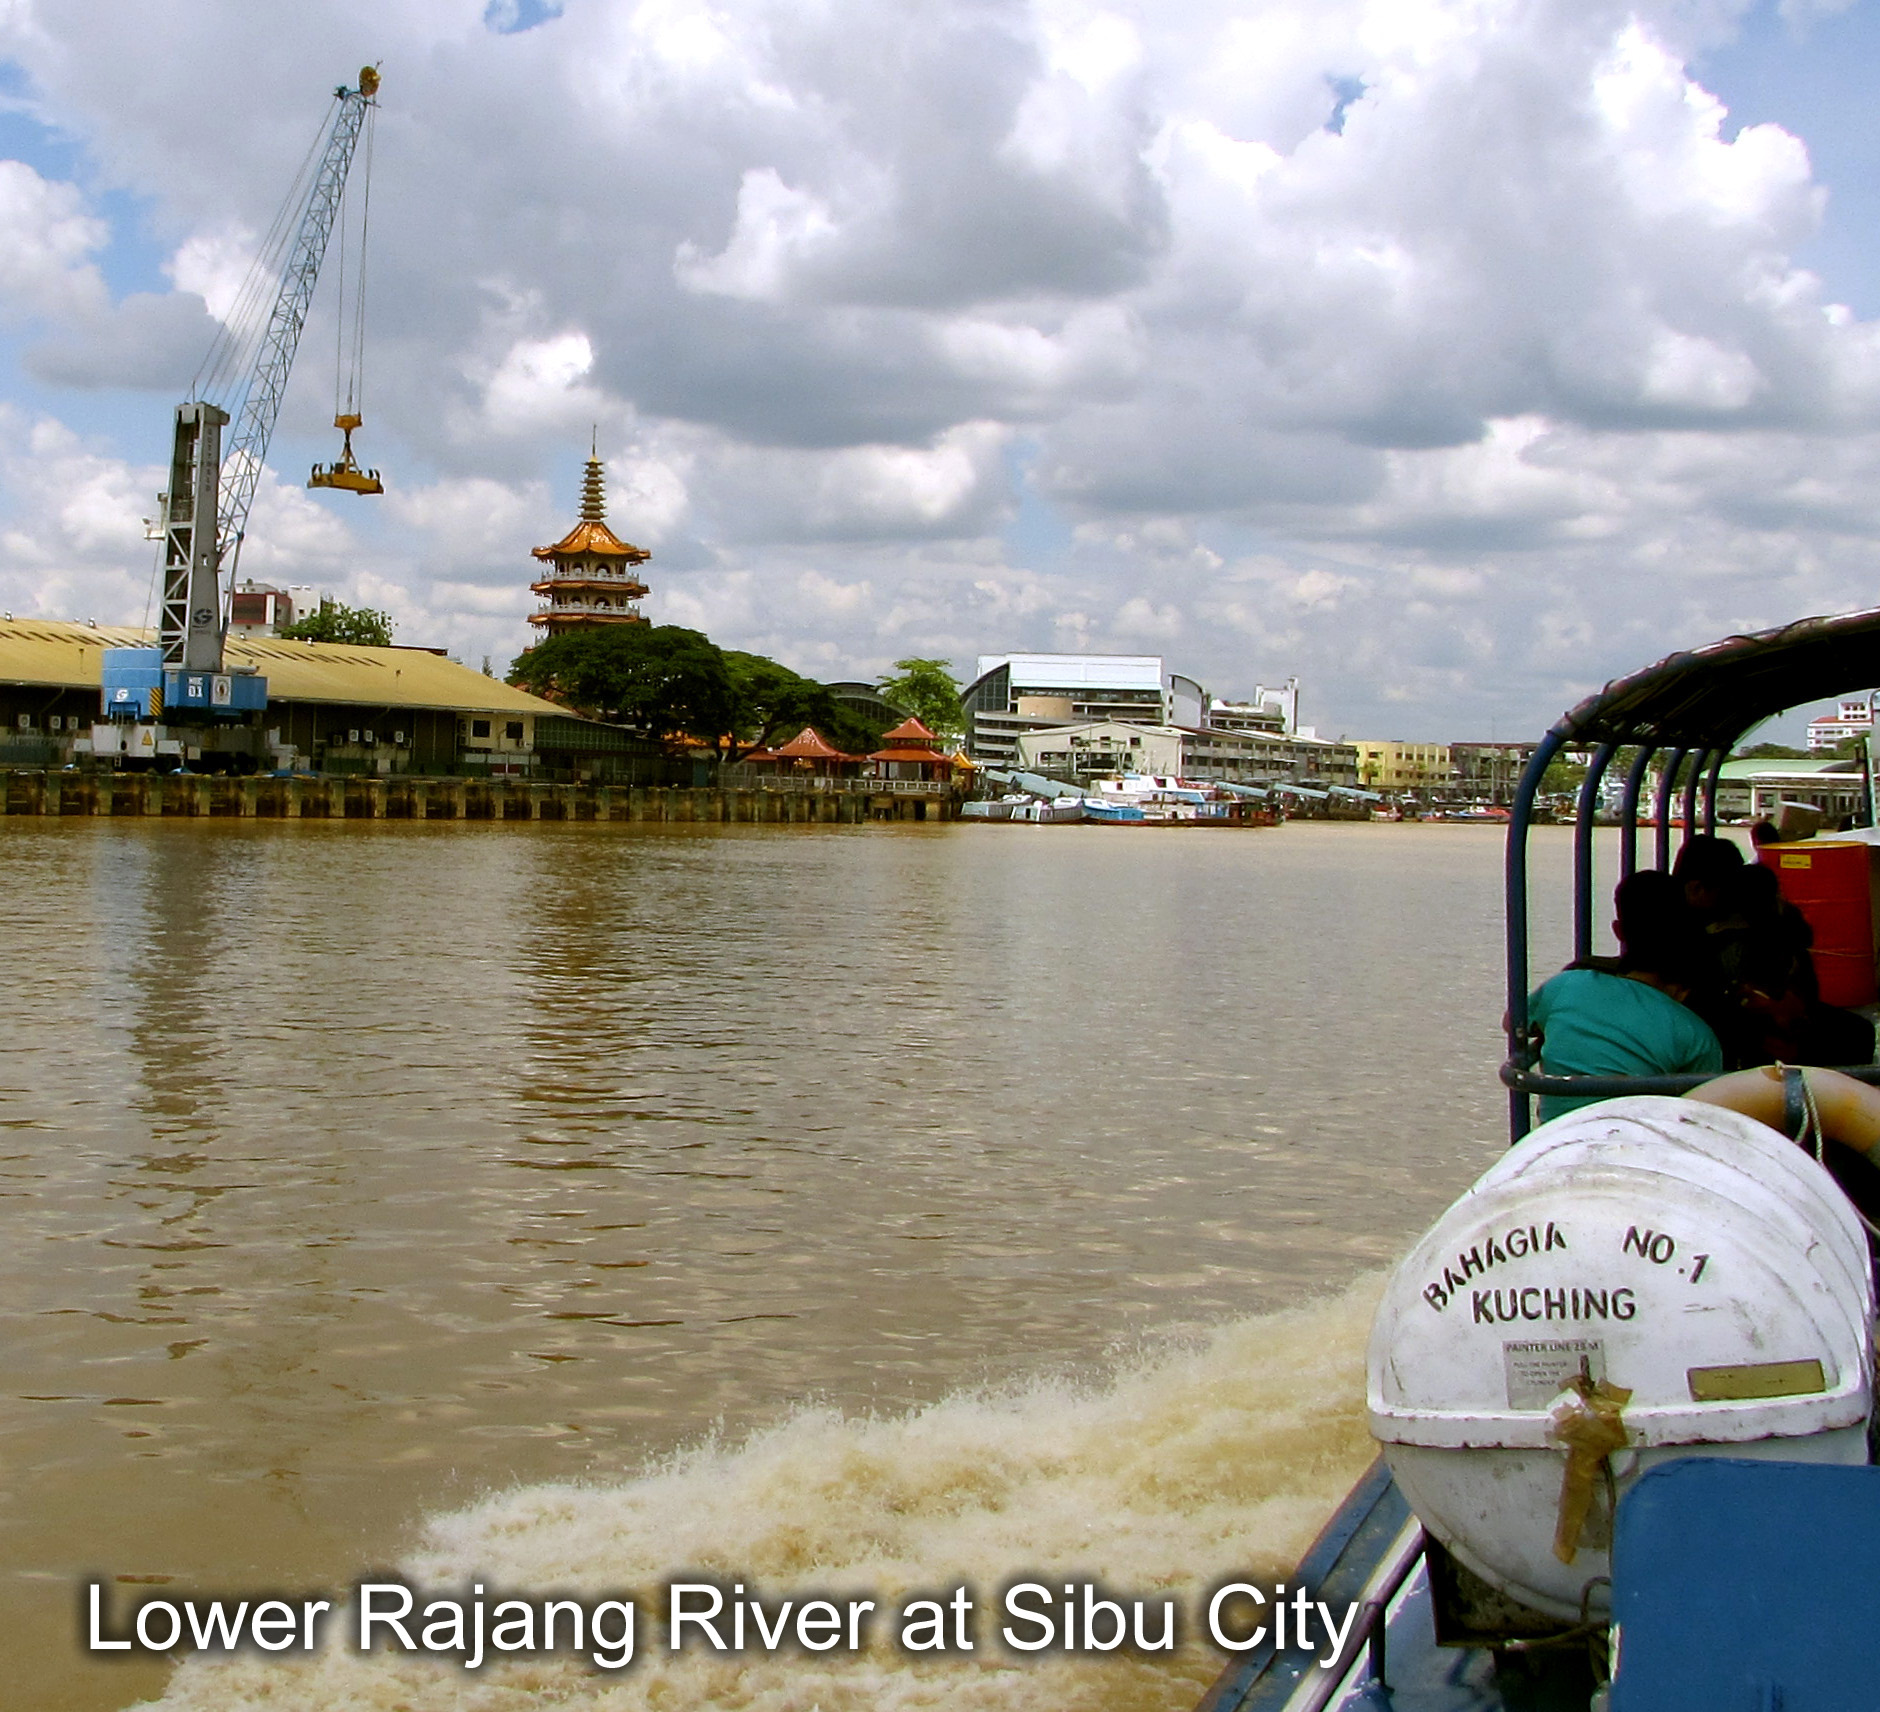 Lower Rajang River at Sibu City